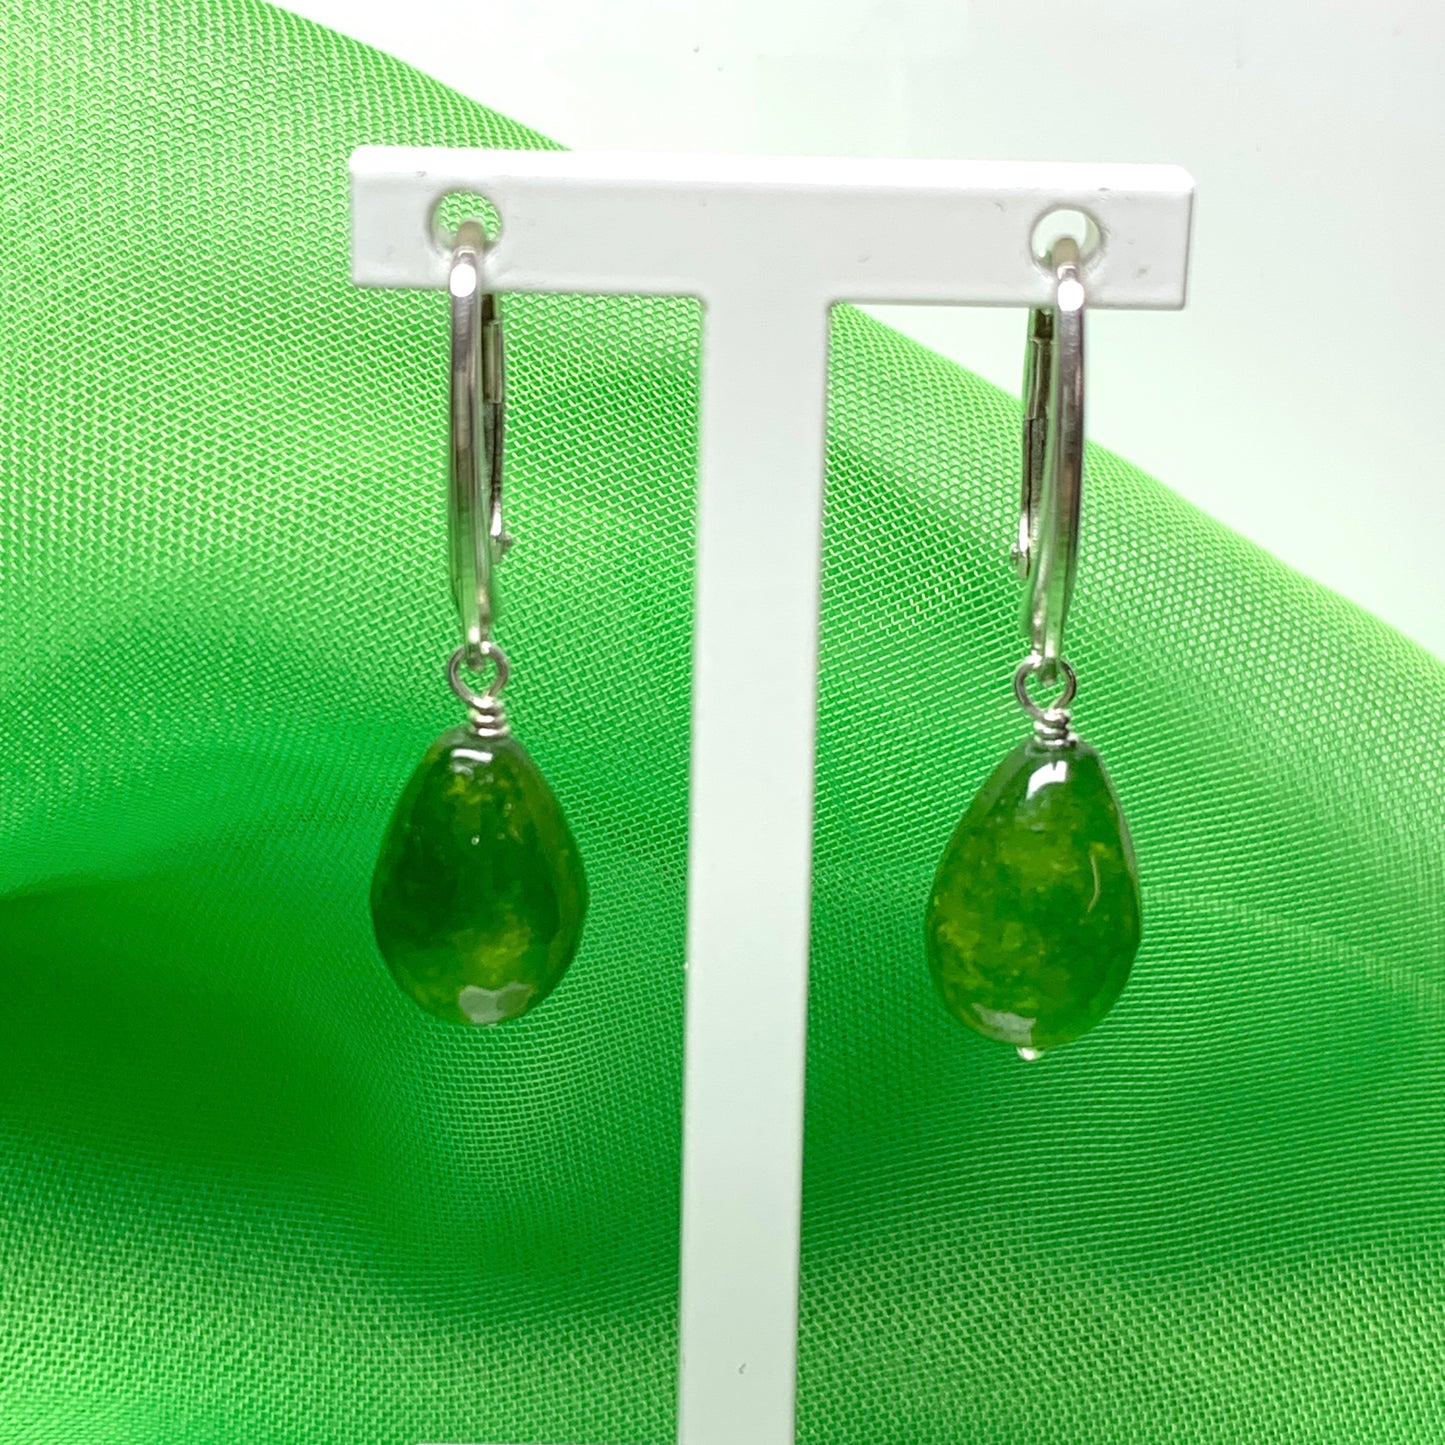 Jade necklace teardrop shaped green pendant